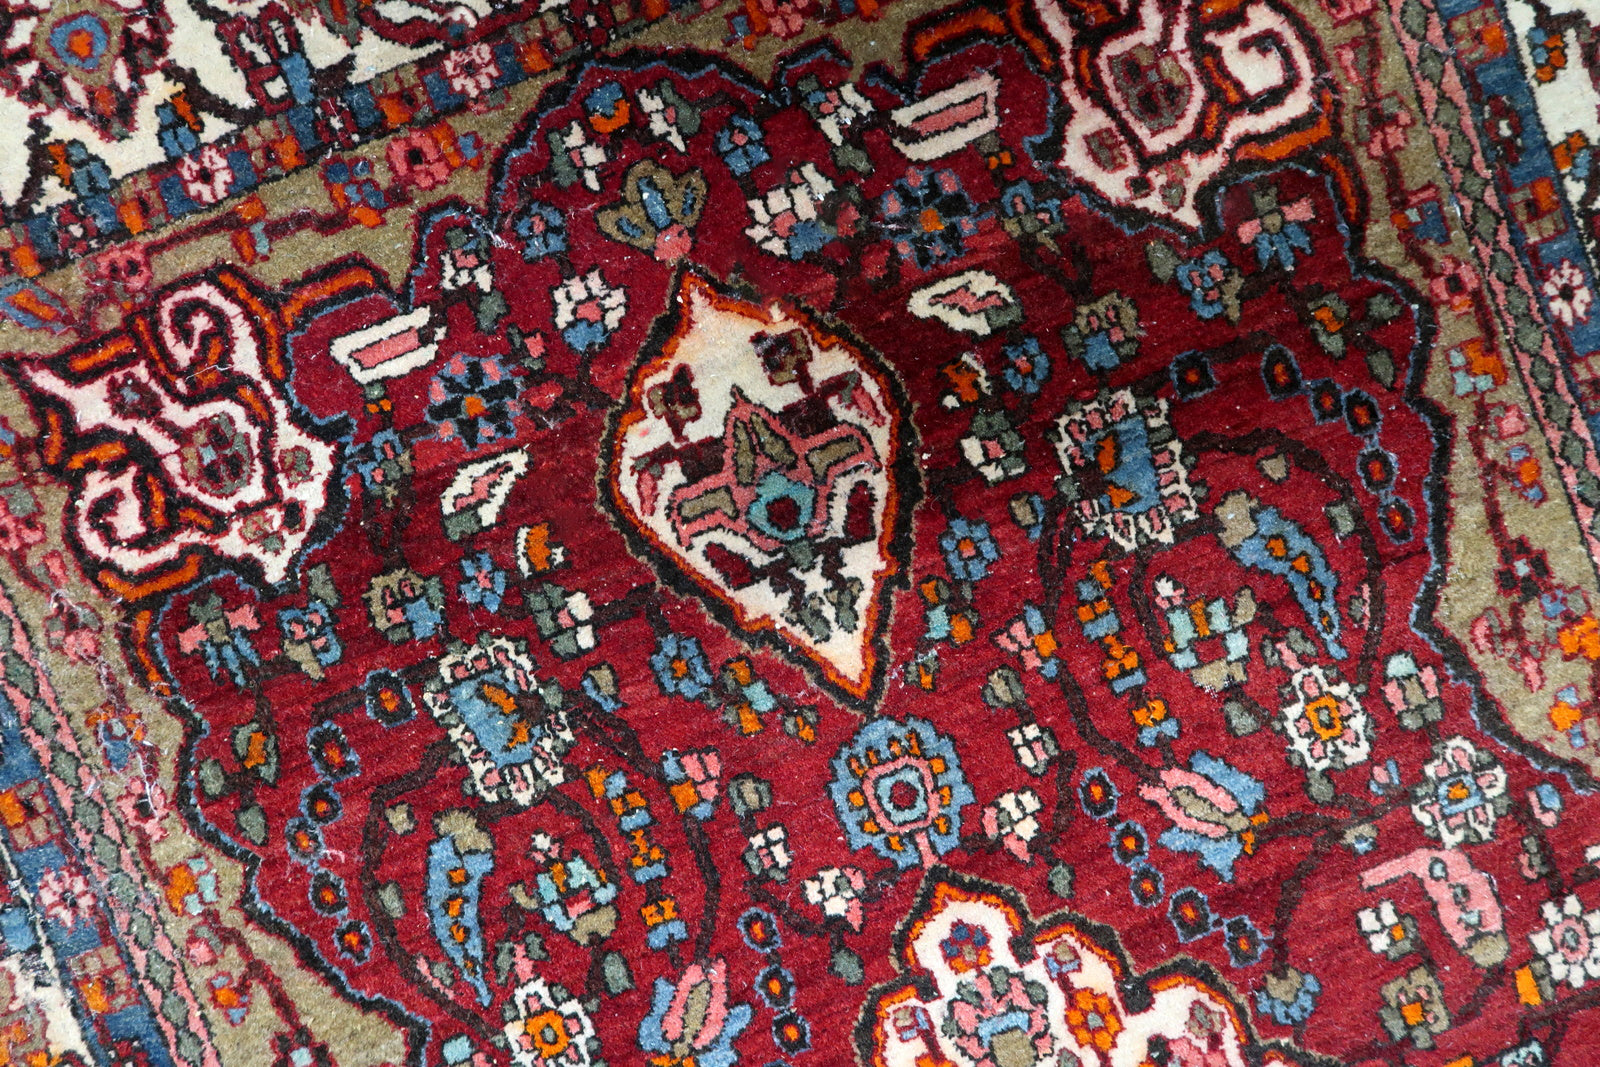 Vintage Oriental Carpet - Red and Olive Green Tones